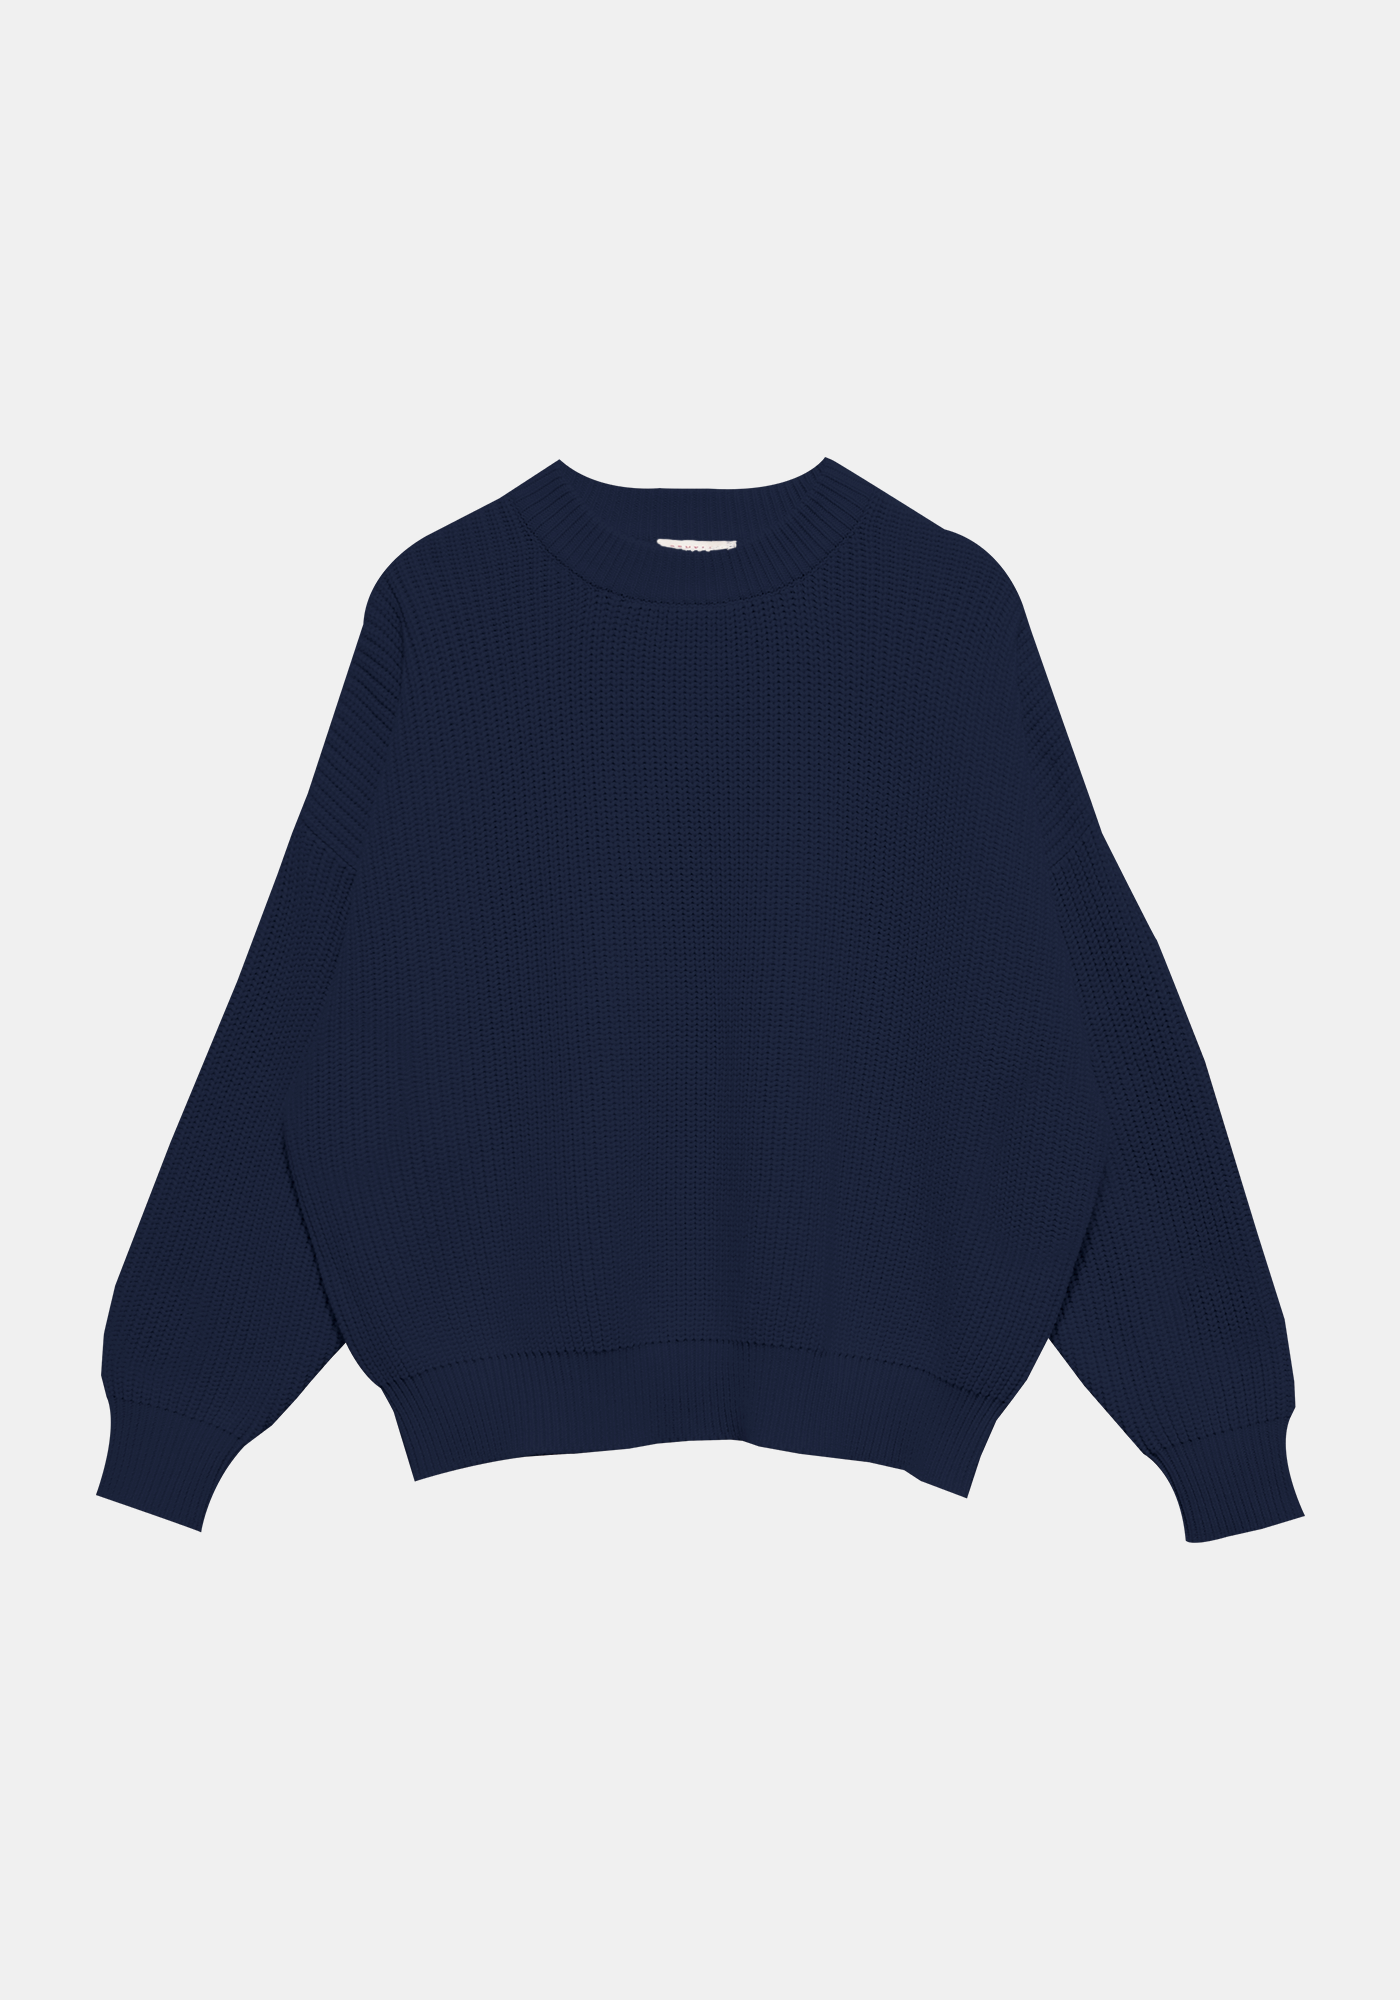 Konan Sweater